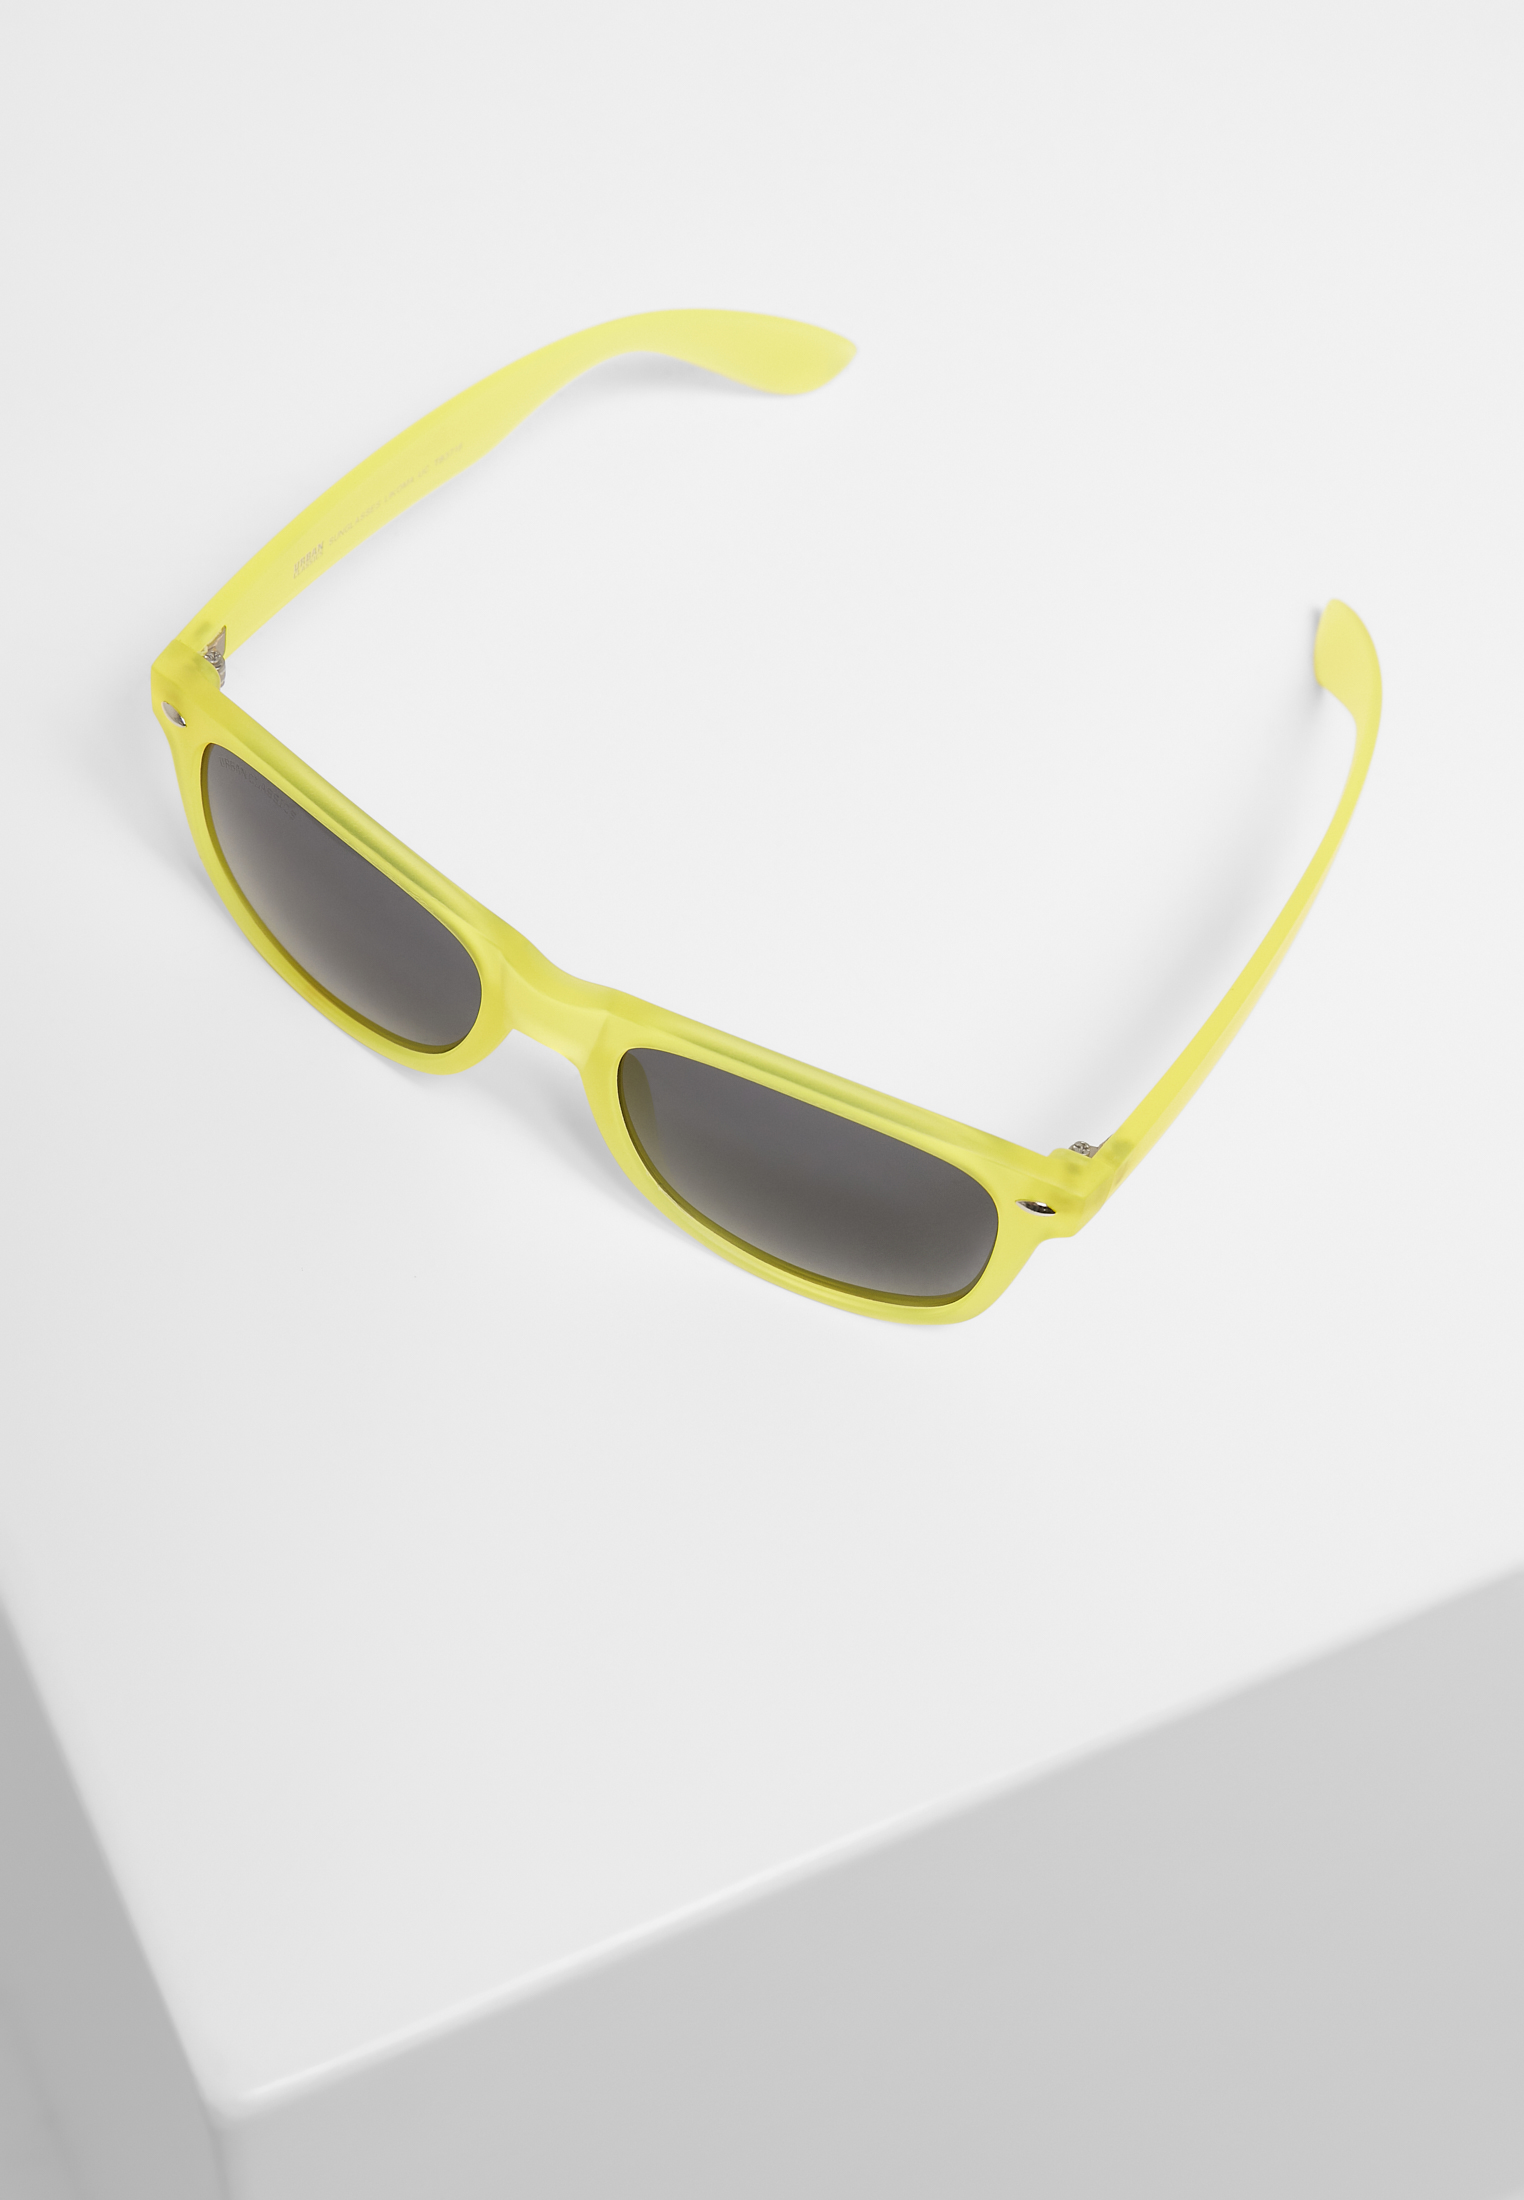 Sonnenbrillen Sunglasses Likoma UC in Farbe neonyellow